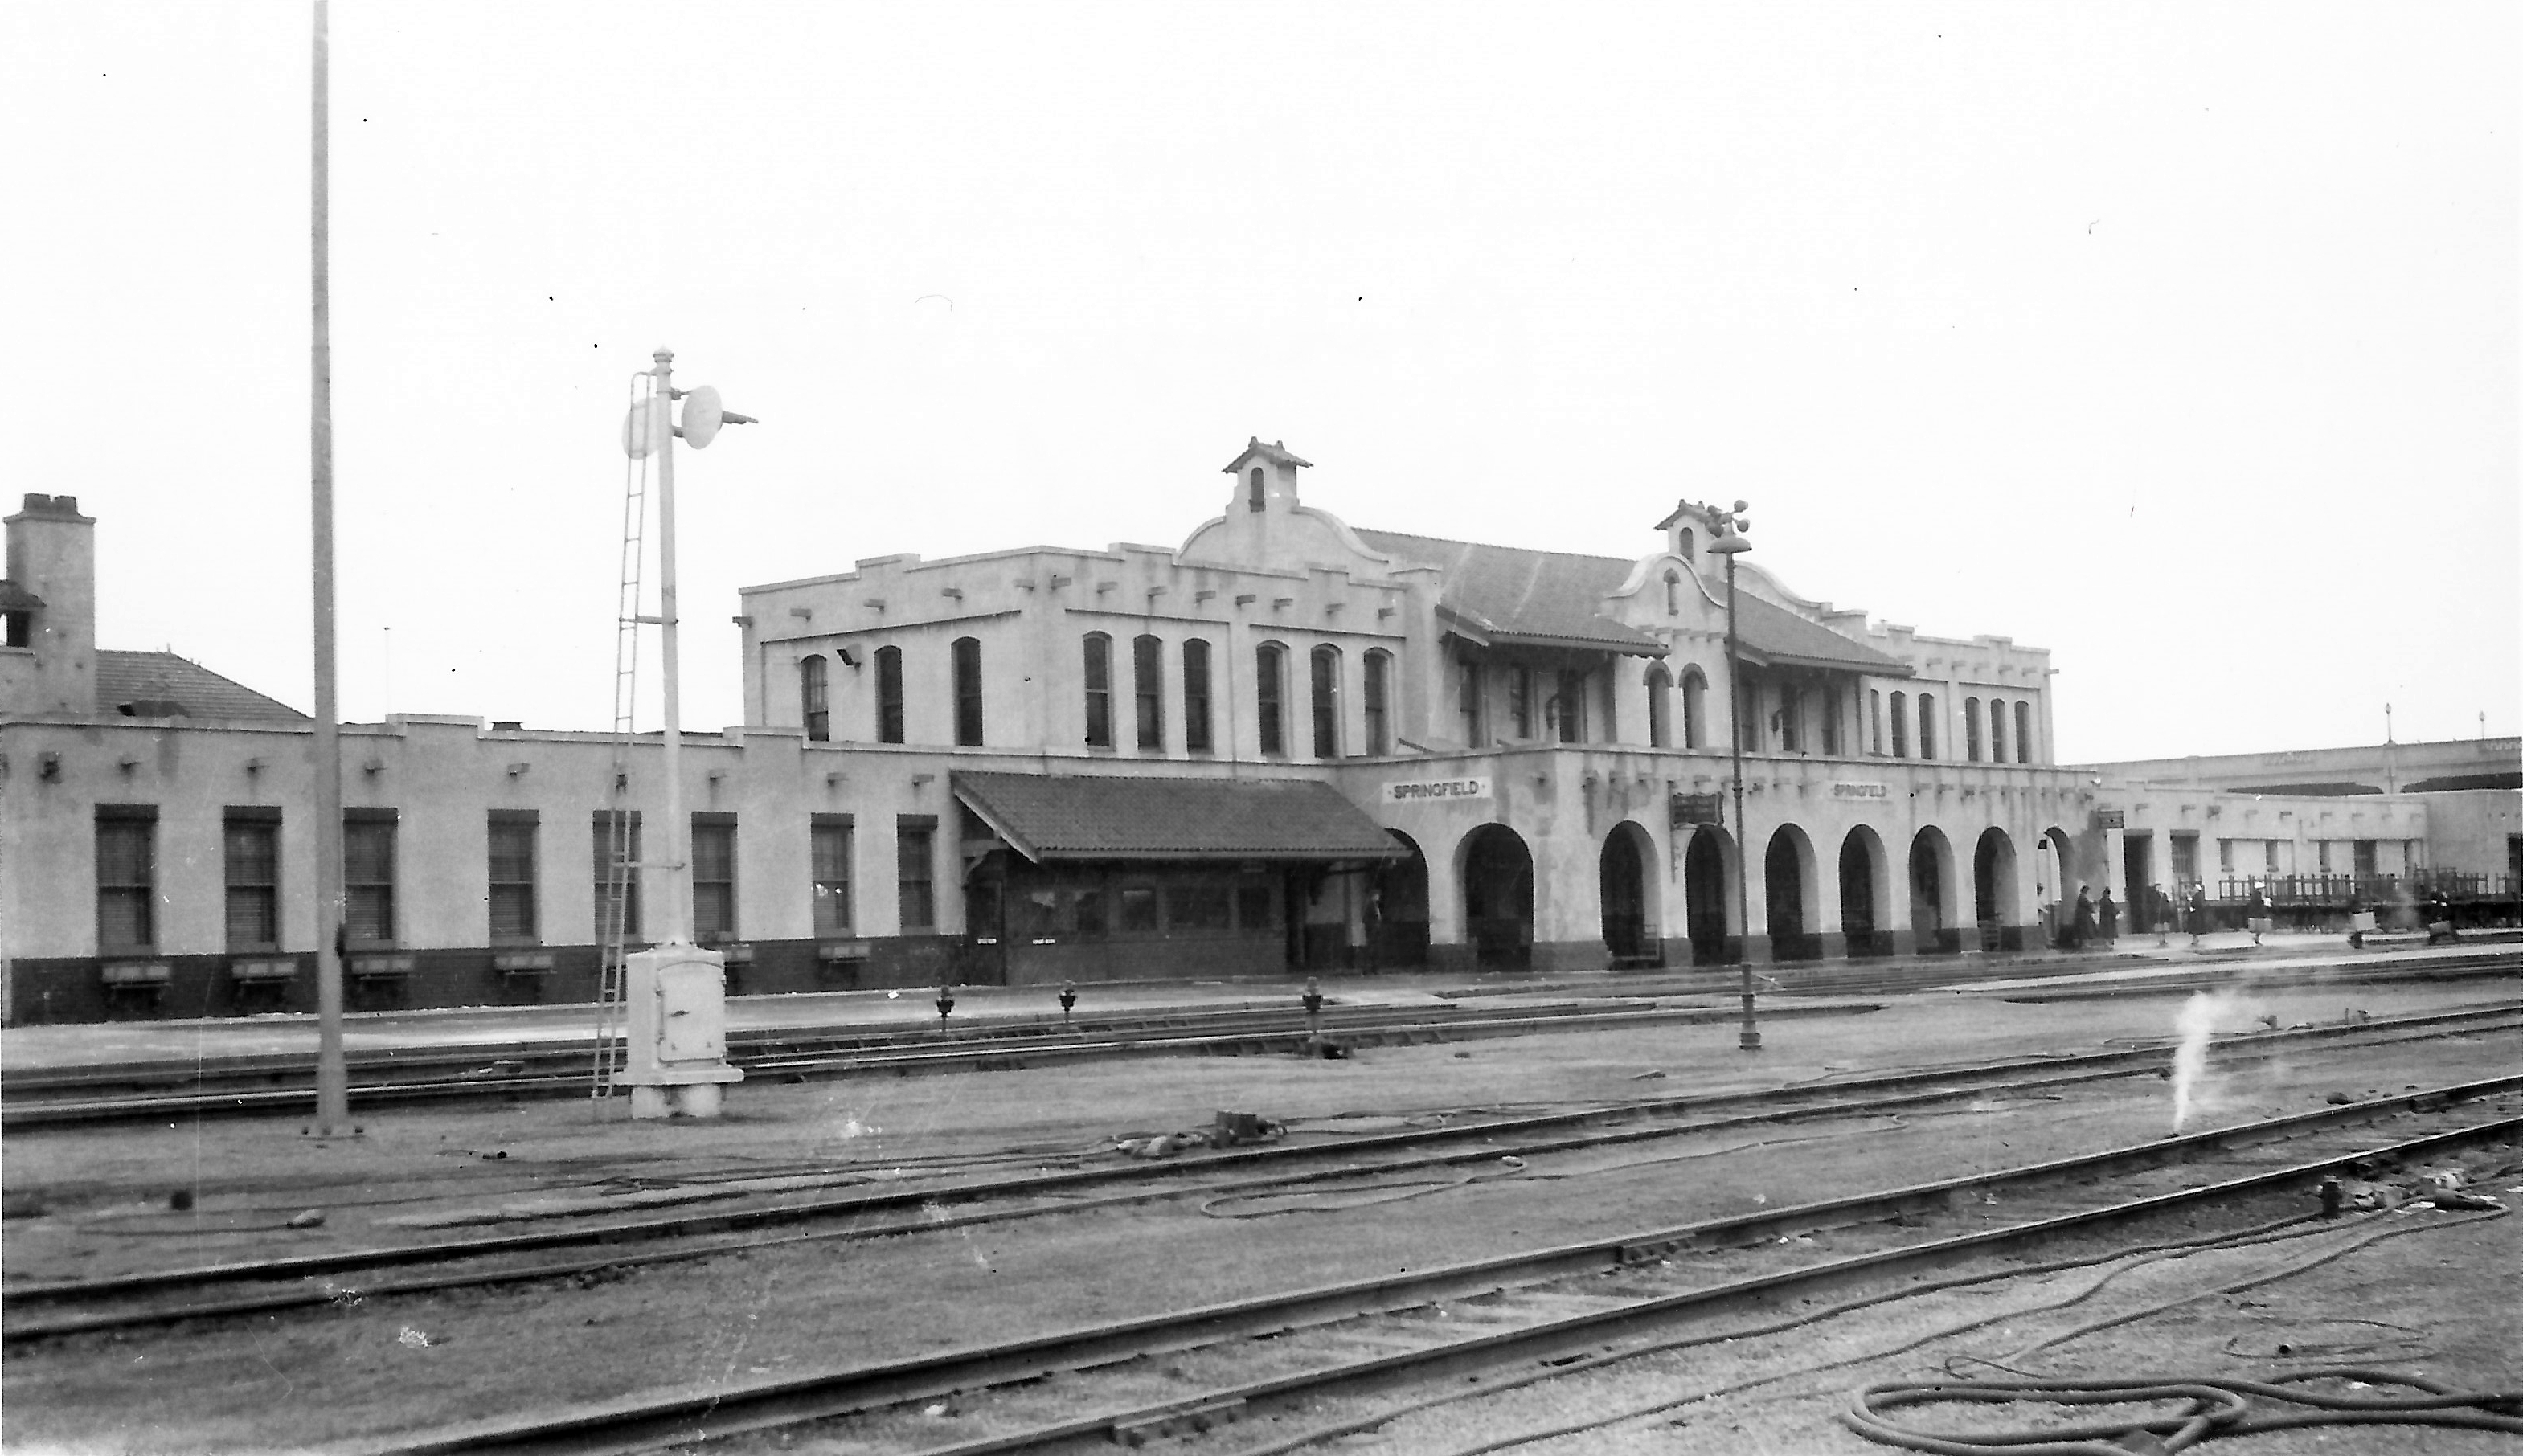 Springfield, Missouri Passenger Station on January 18, 1953 (Arthur B. Johnson)